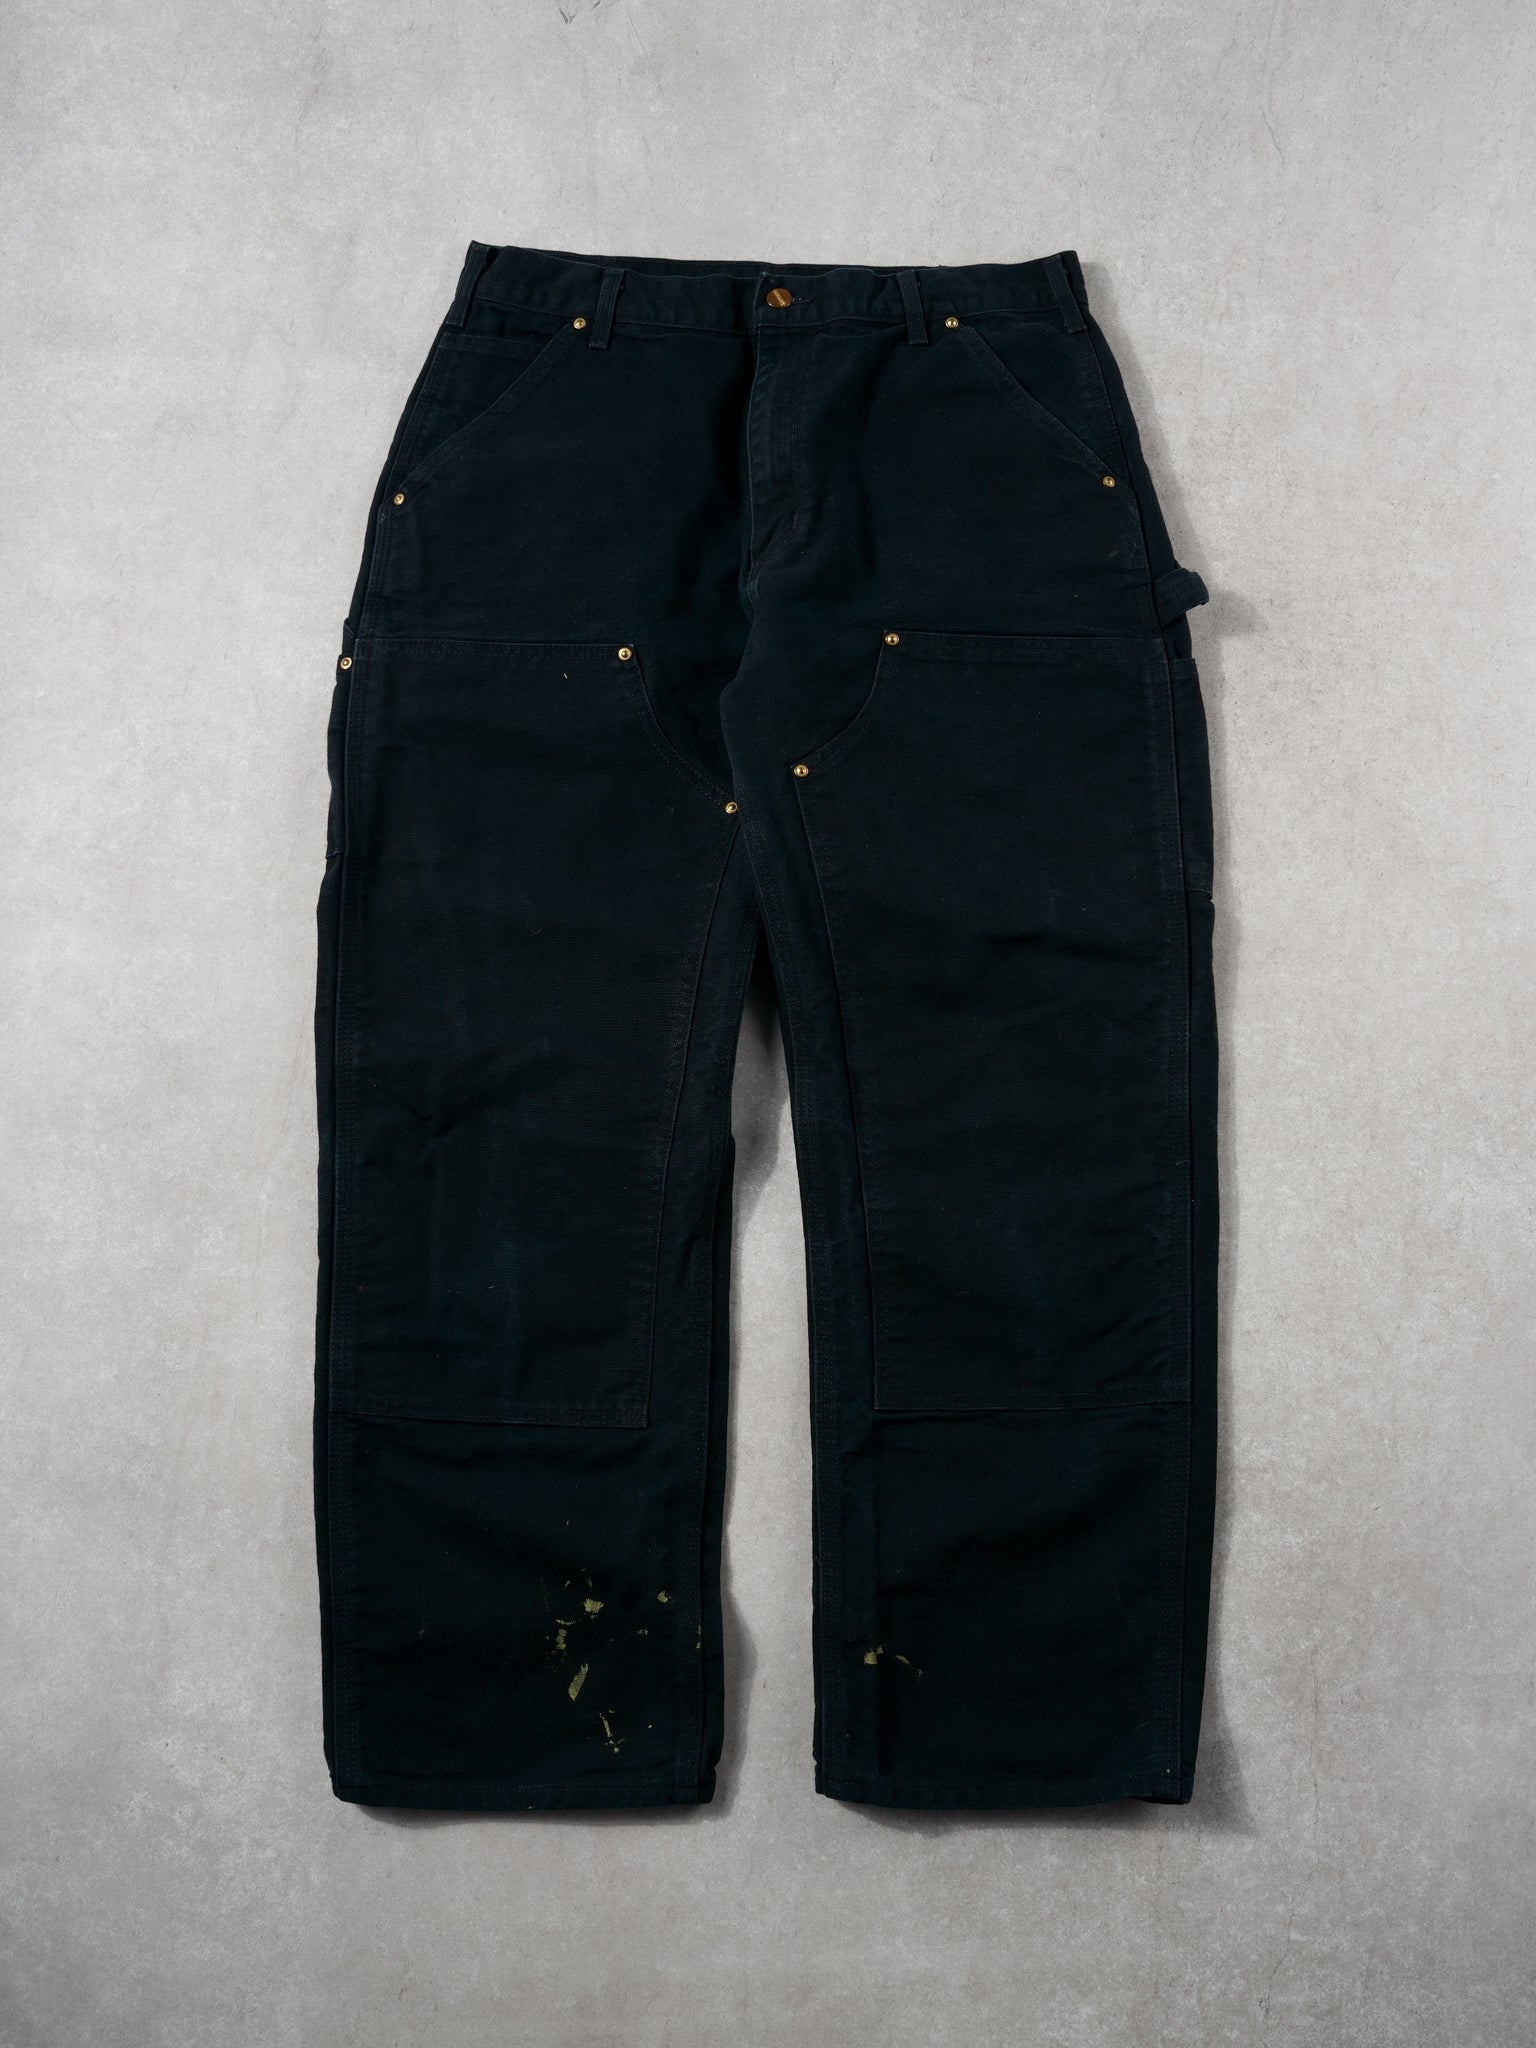 Vintage 90s Black Carhartt Double Knee Carpenter Pants (32x29)